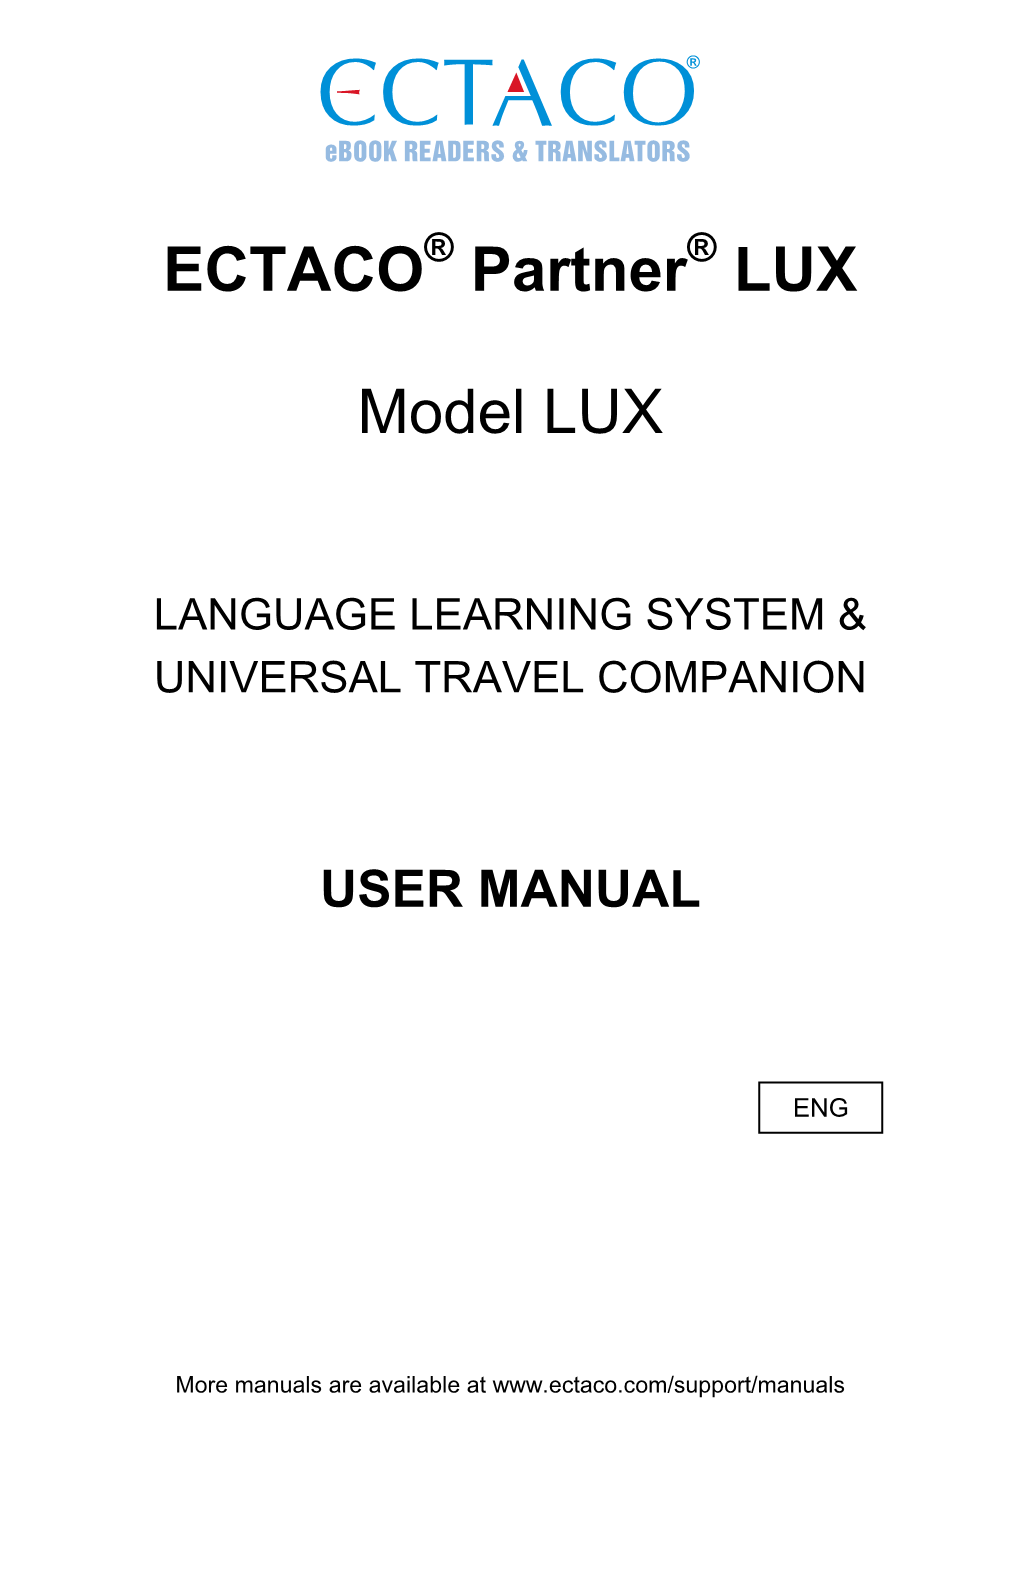 ECTACO Partner LUX Model